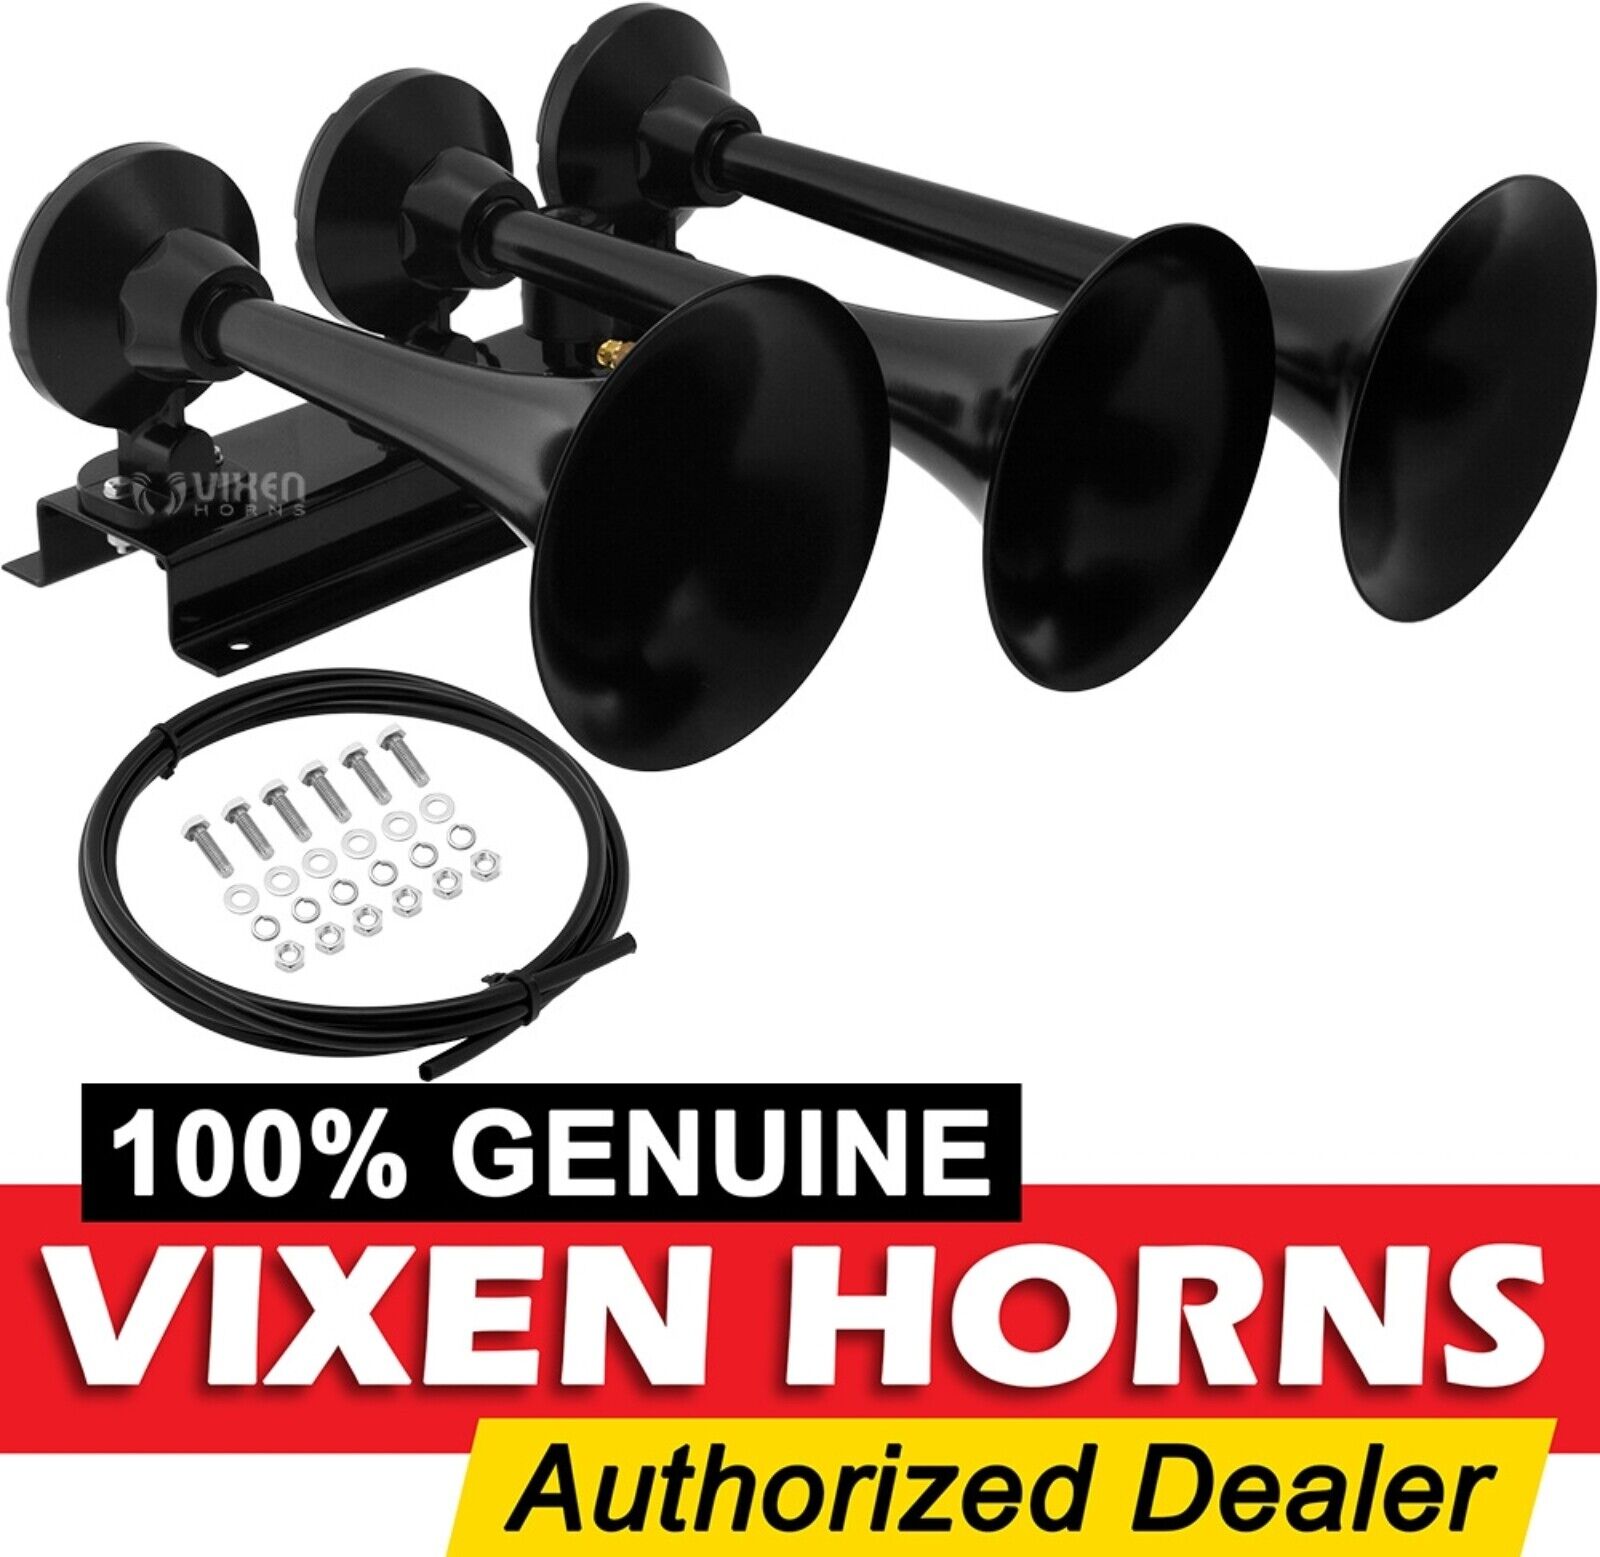 VIXEN HORNS TRAIN AIR HORN 3 TRUMPETS BLACK FOR TRUCK/CAR/SUV LOUD SOUND DB 12V